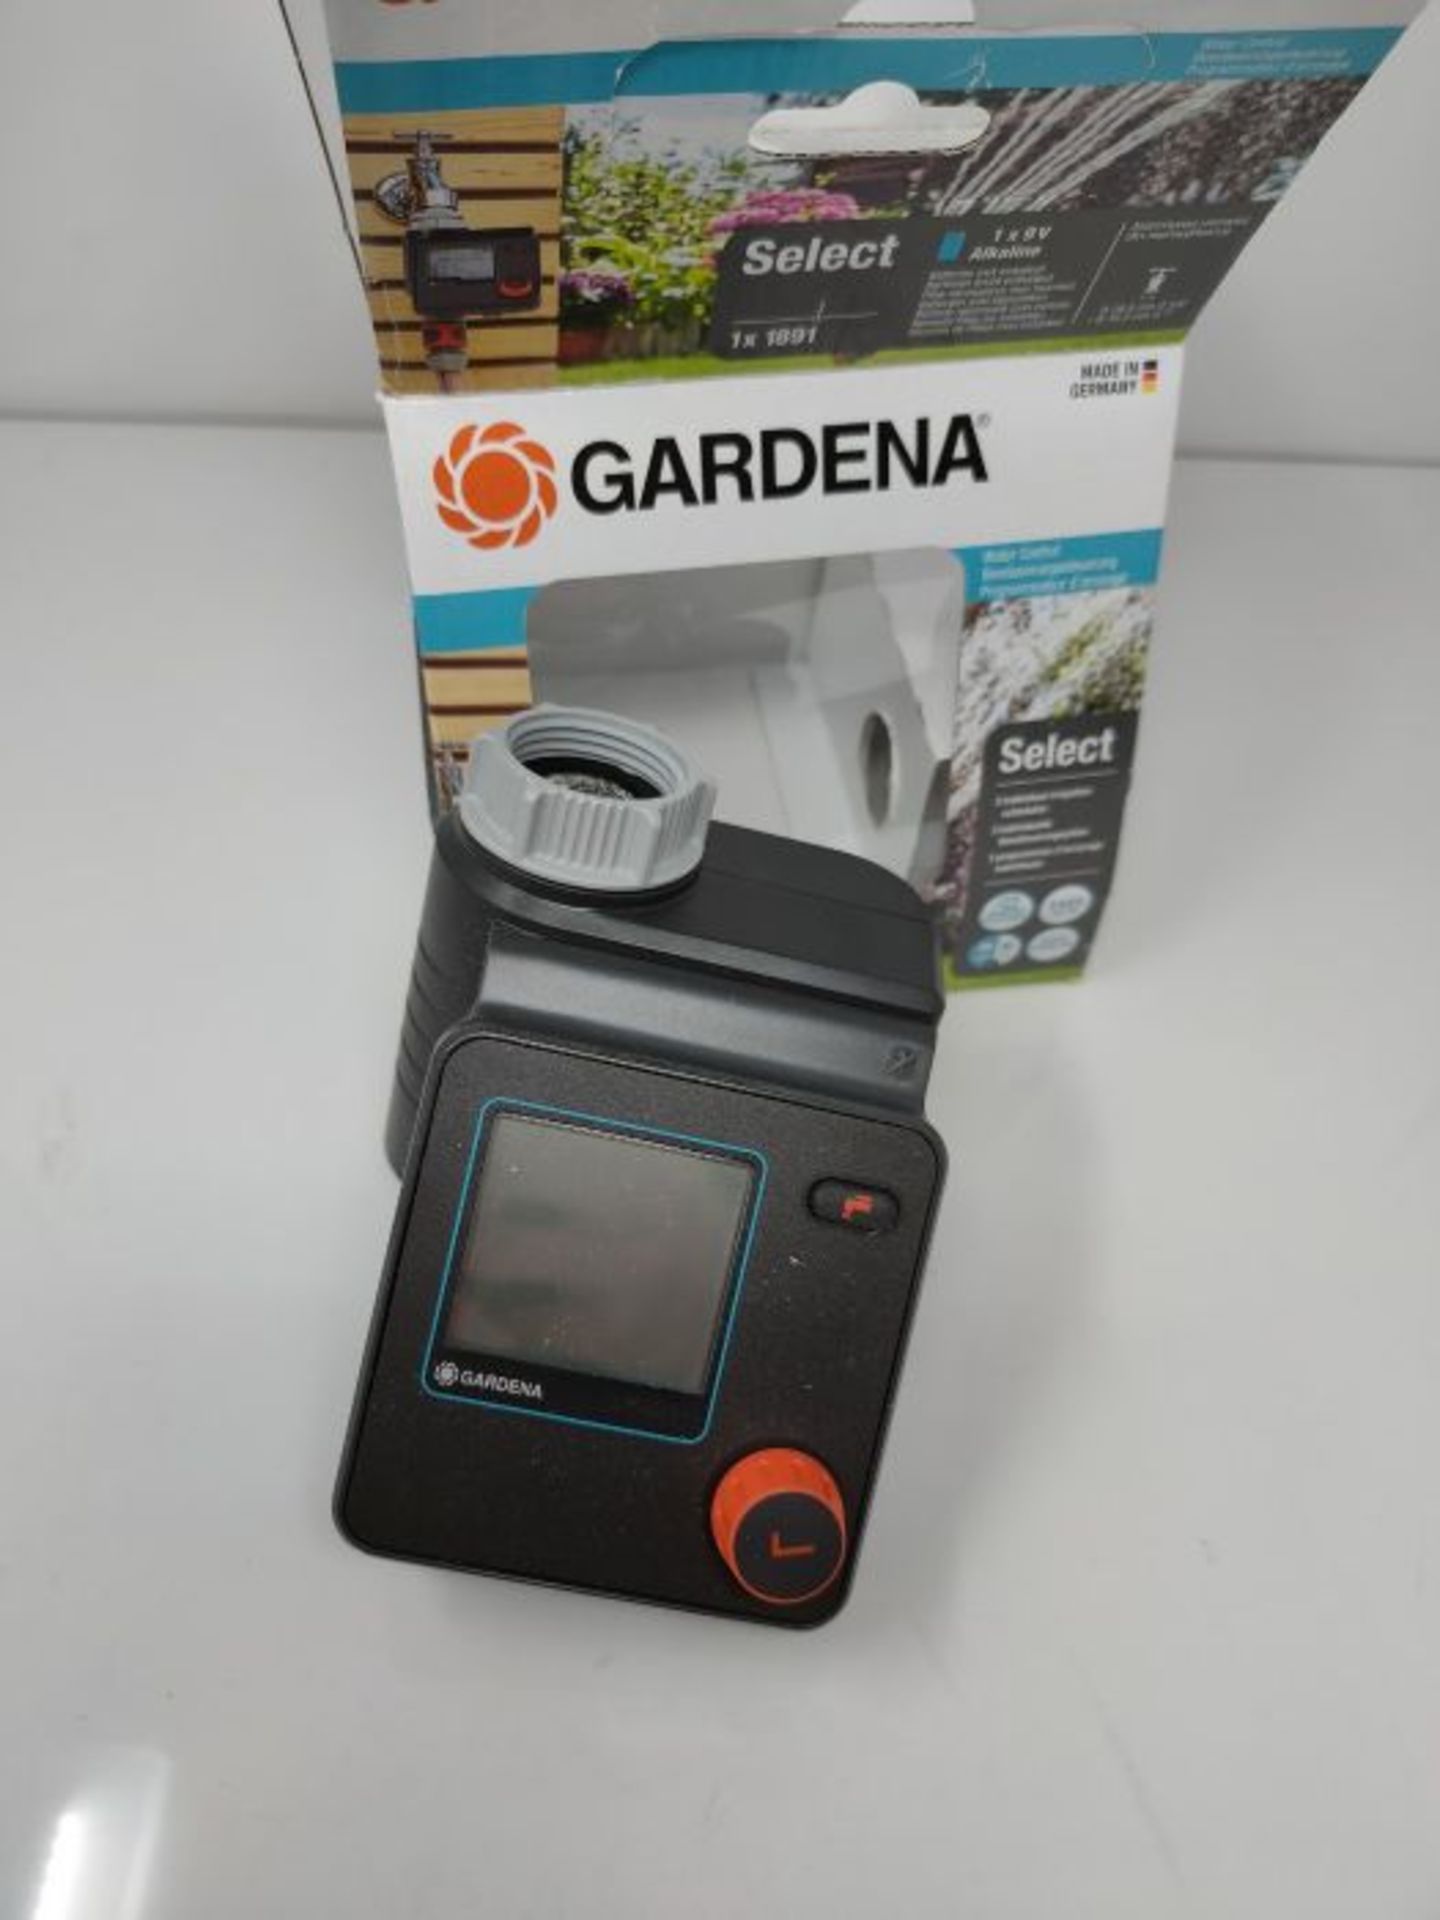 Gardena Select irrigation control, black, gray, orange - Image 3 of 3